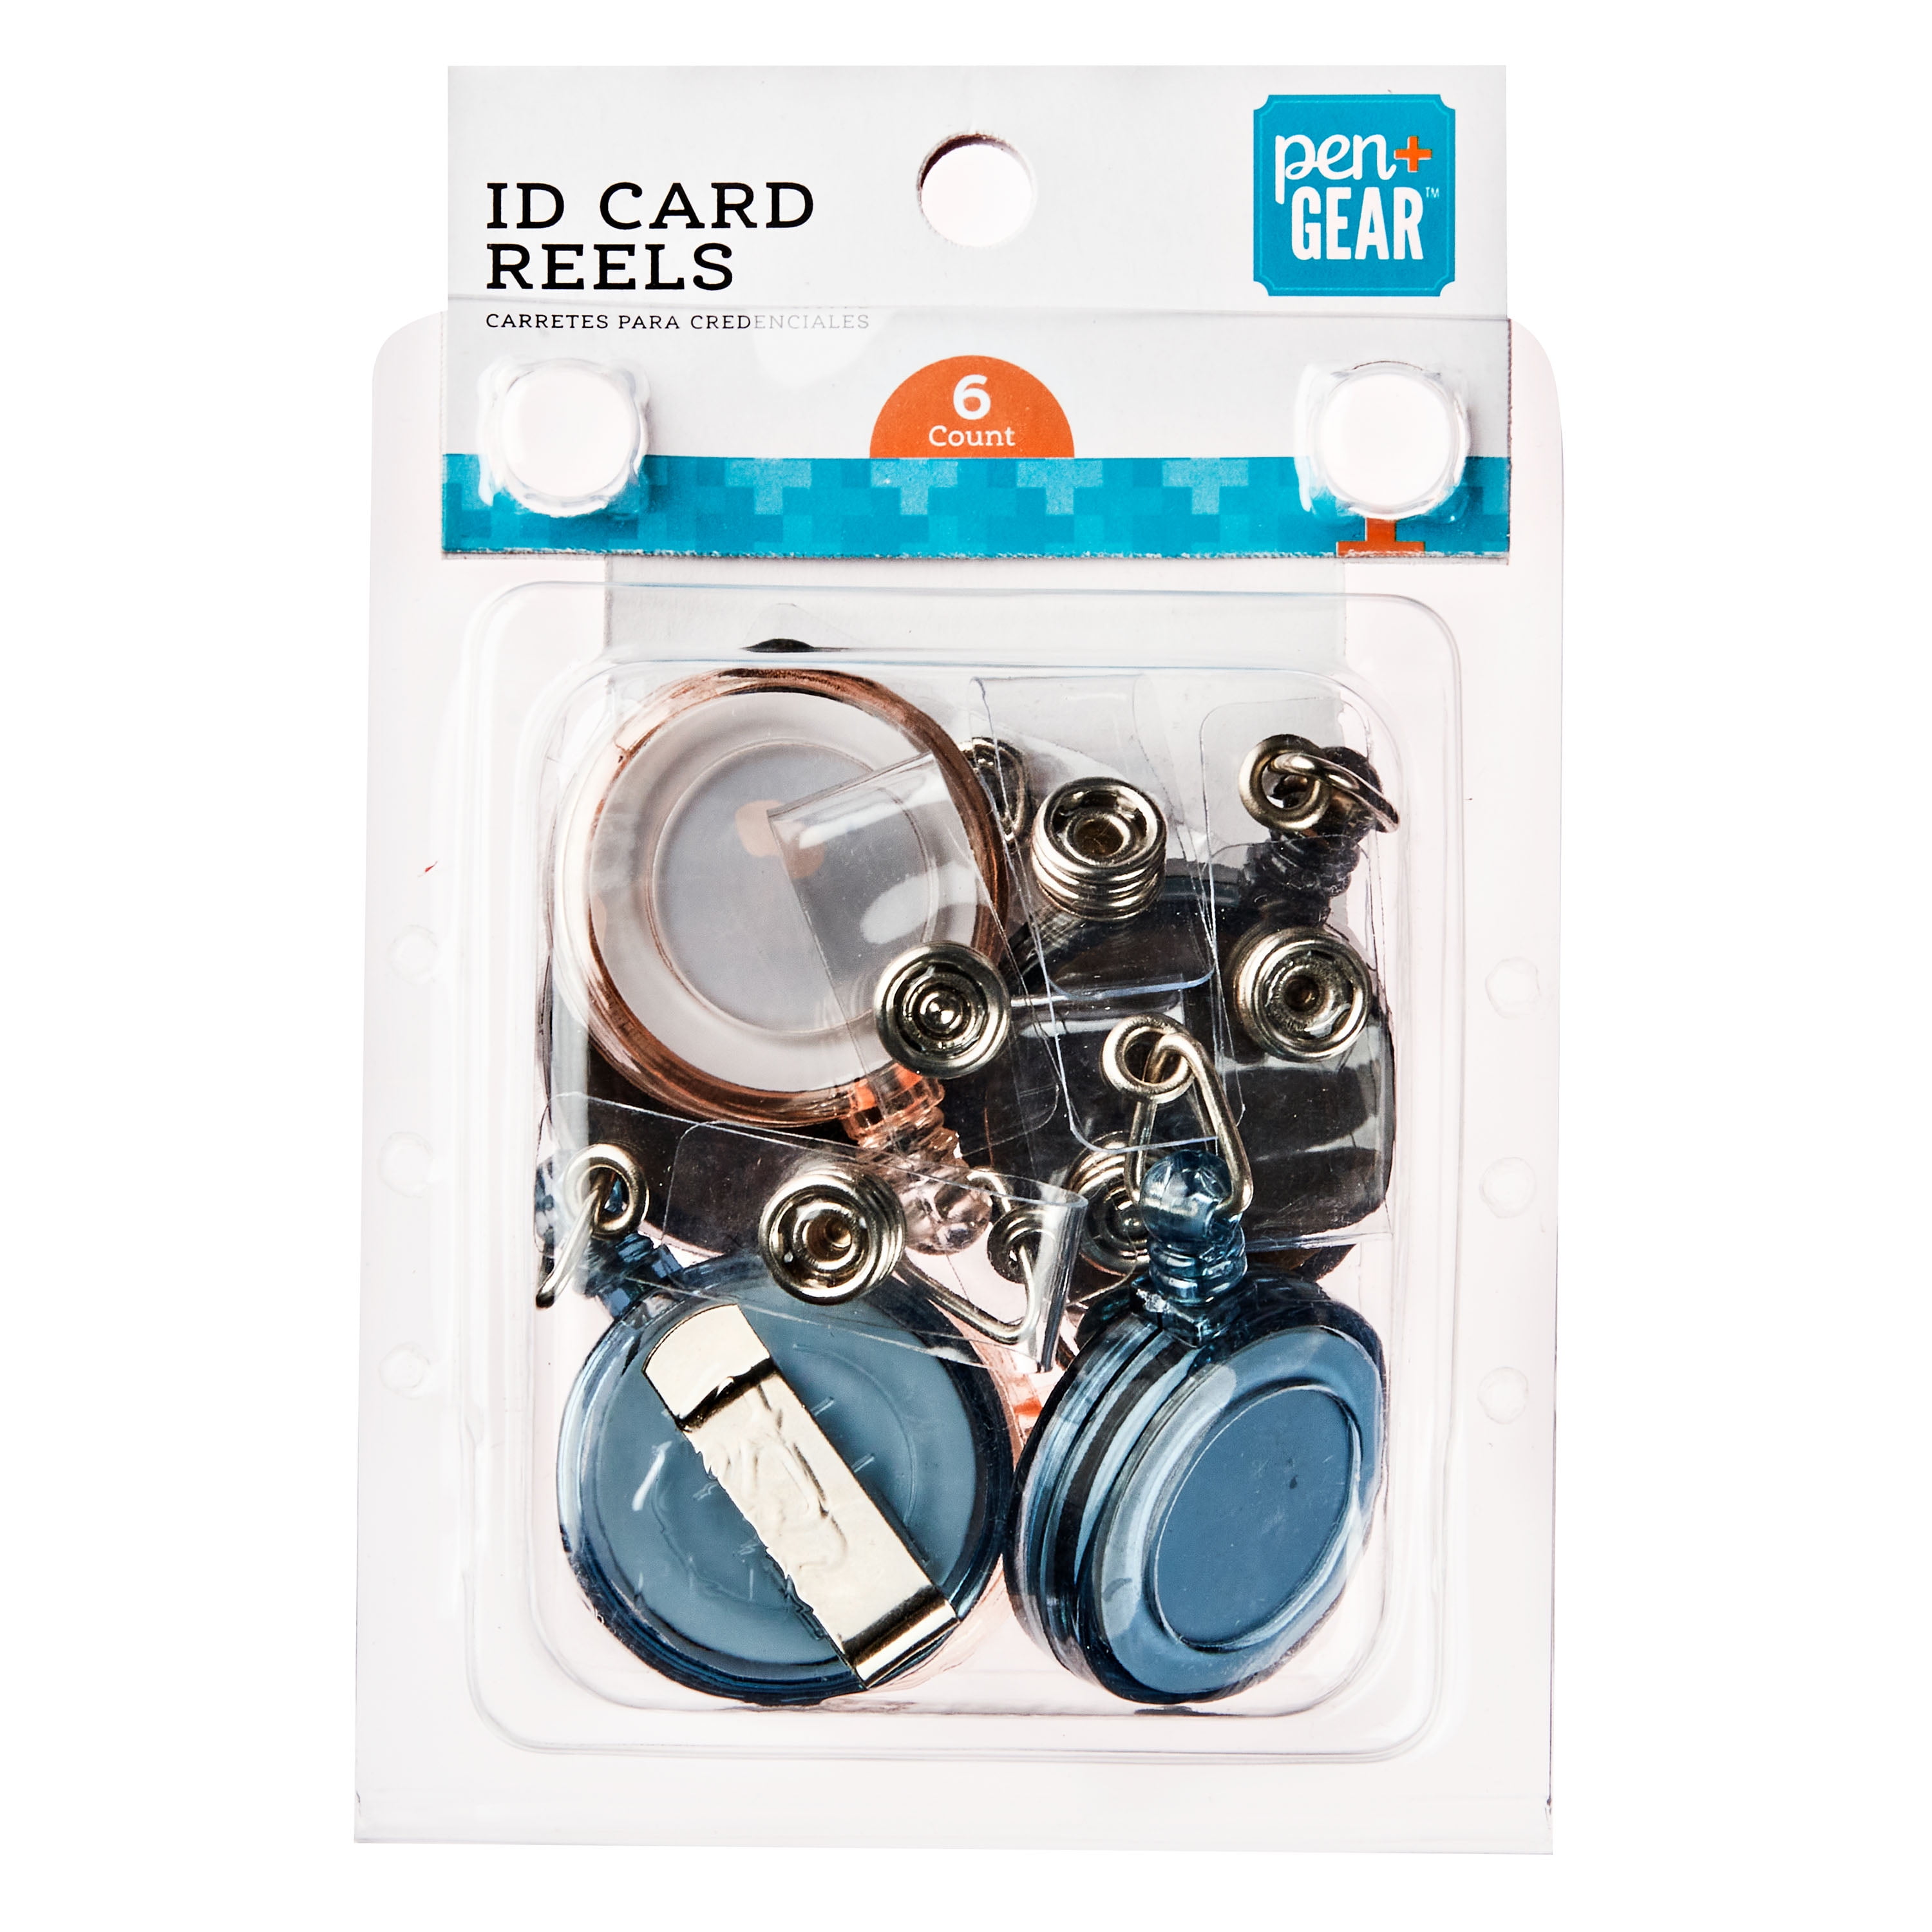 Pen+Gear Pen + Gear ID Card Reels, Assorted Colors, Pack of 6